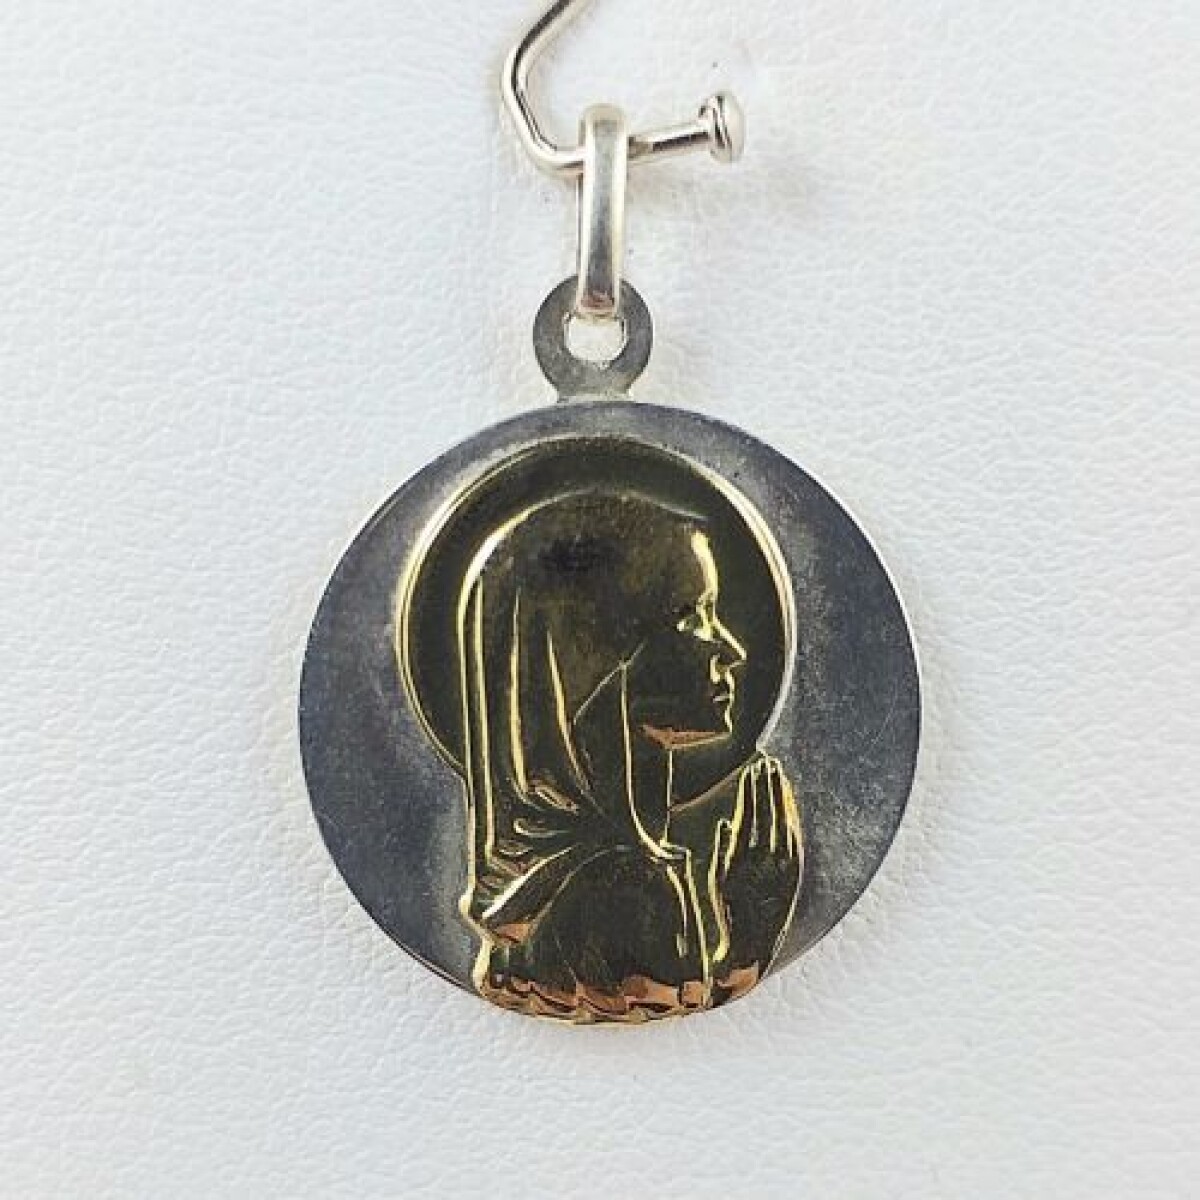 Medalla Religiosa de plata 925 con Virgen niña de oro 18 Ktes. Diámetro 1.8 cm y espesor 2 mm. 